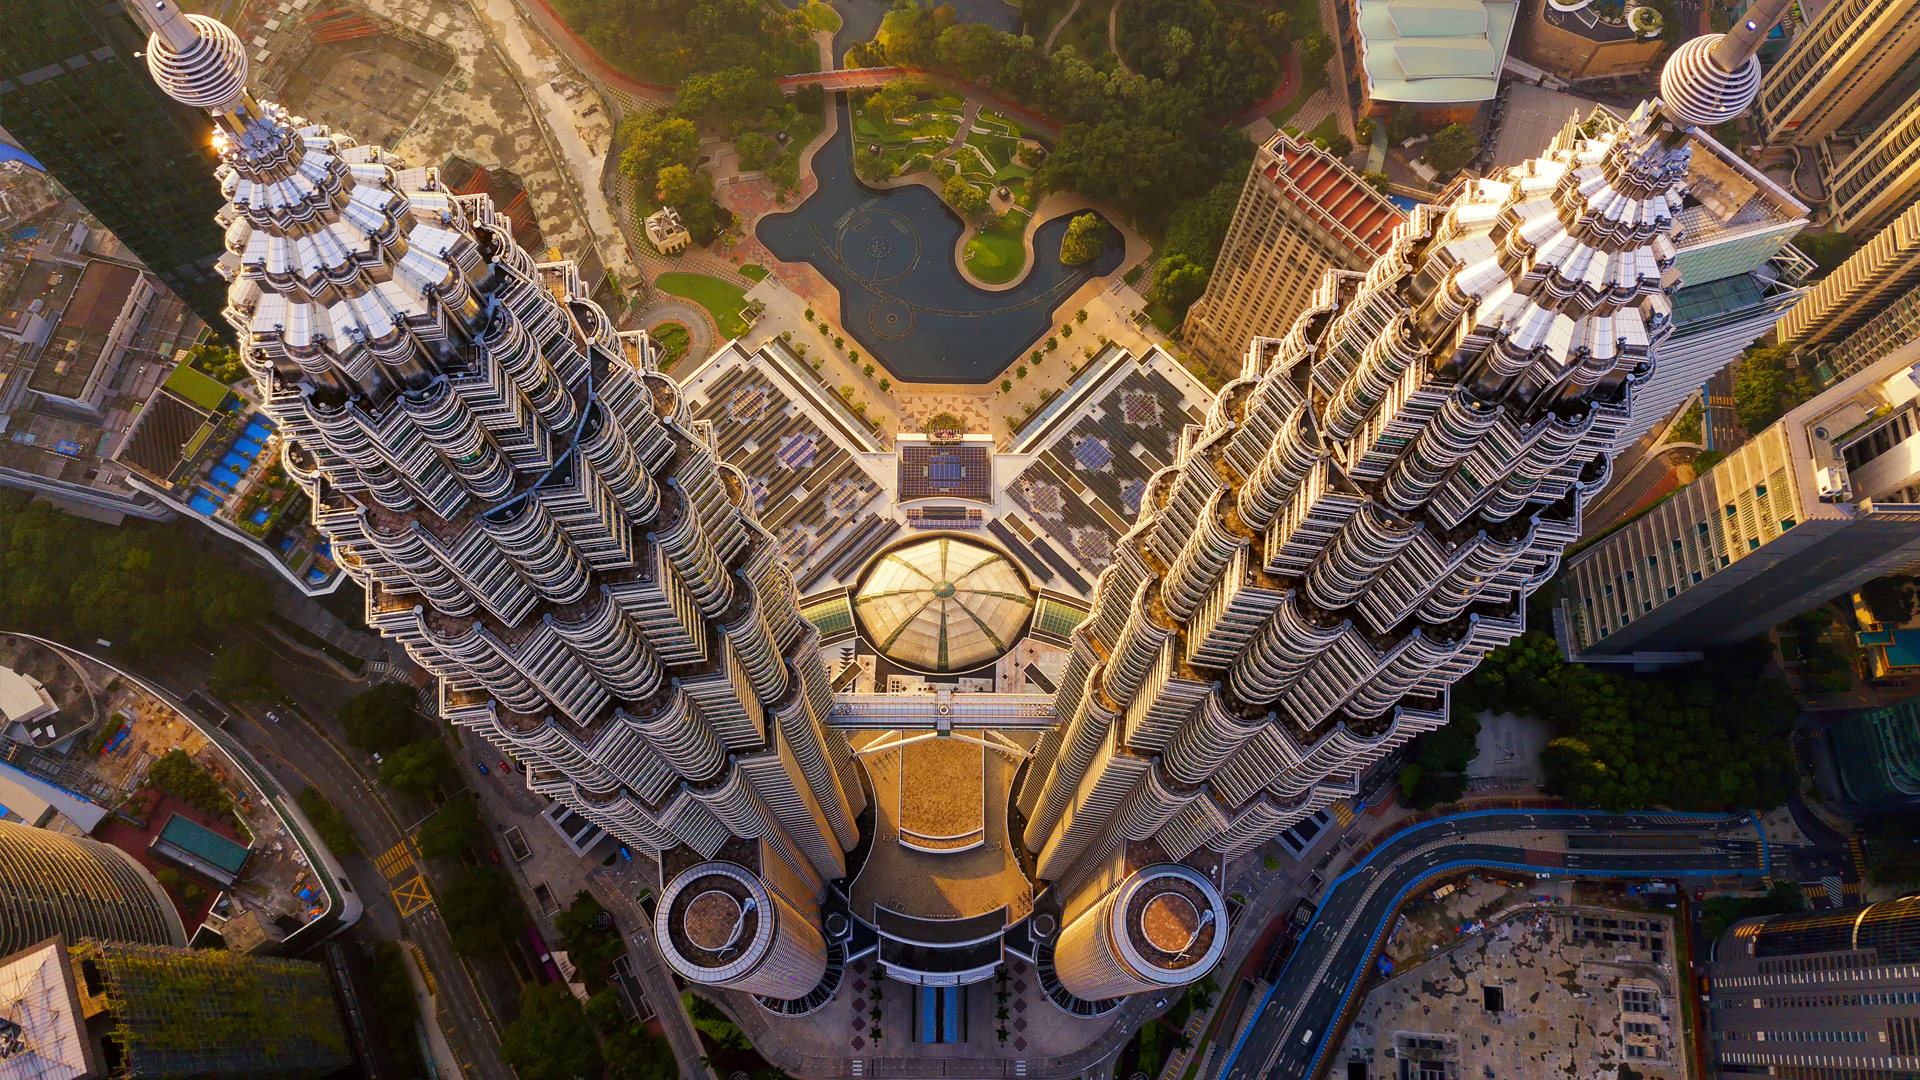 An image of the Malaysia Petronas Towers